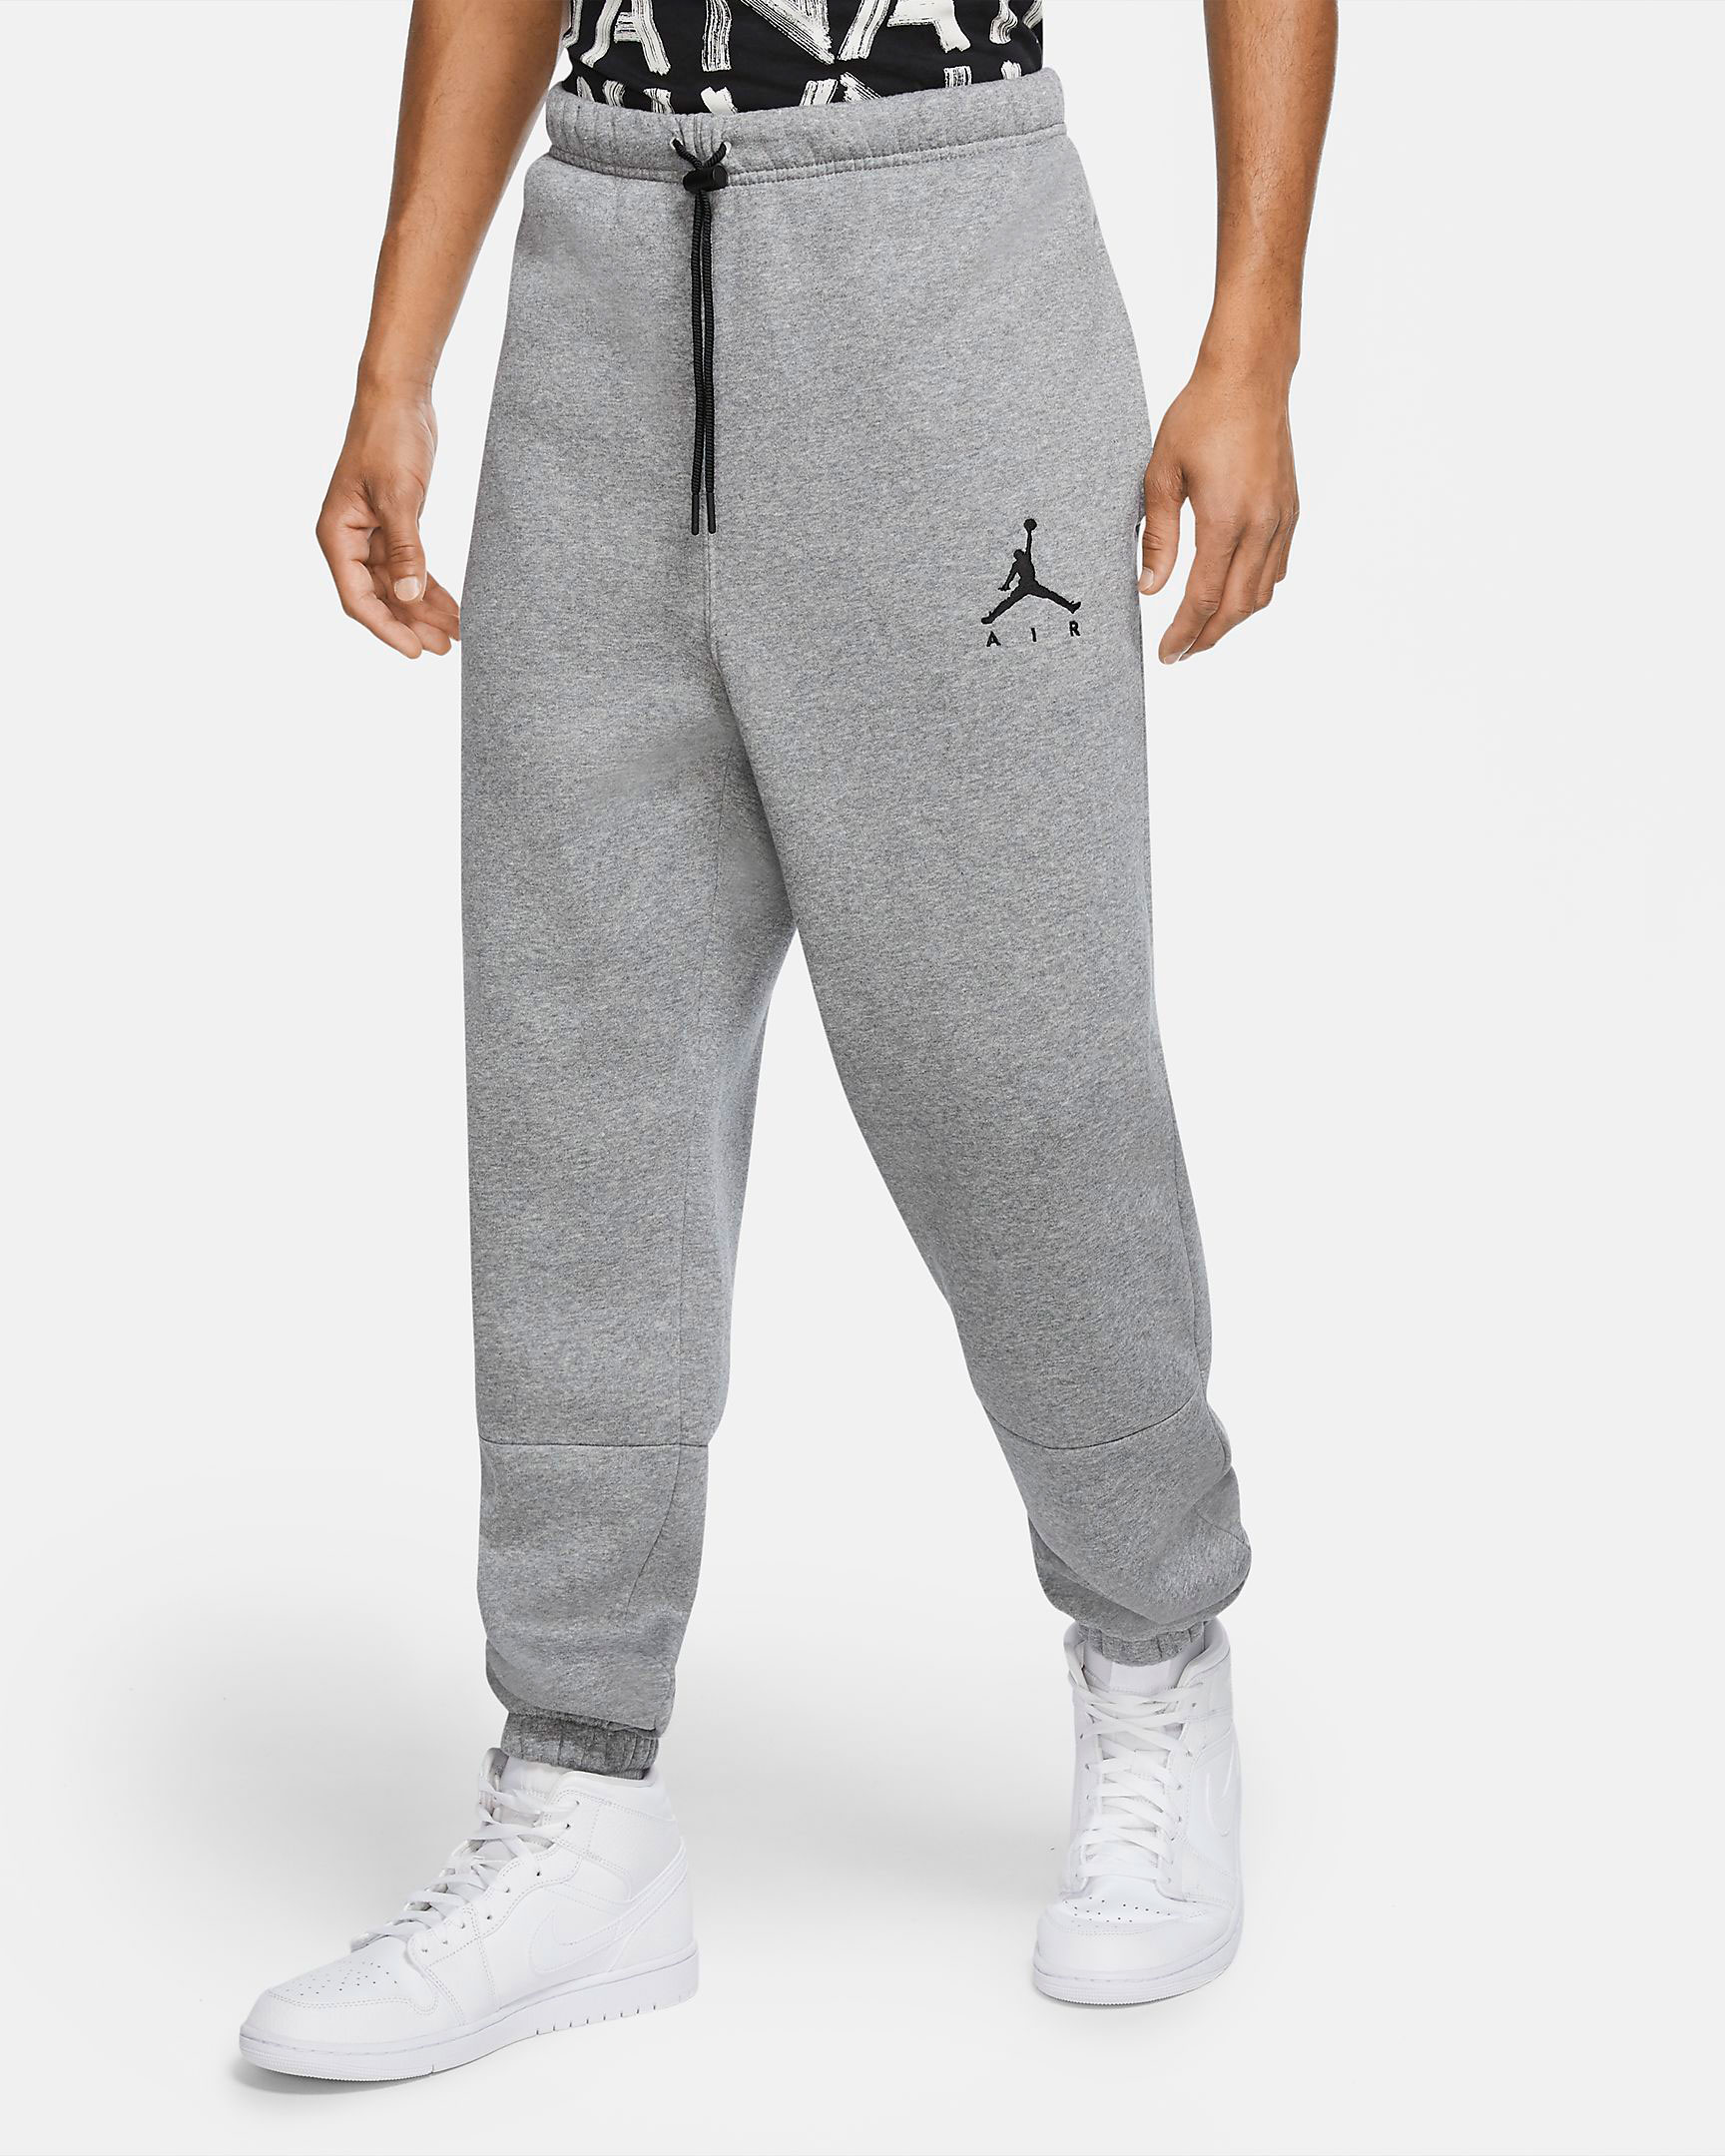 Jordan 1 High Light Smoke Grey Clothing | SneakerFits.com